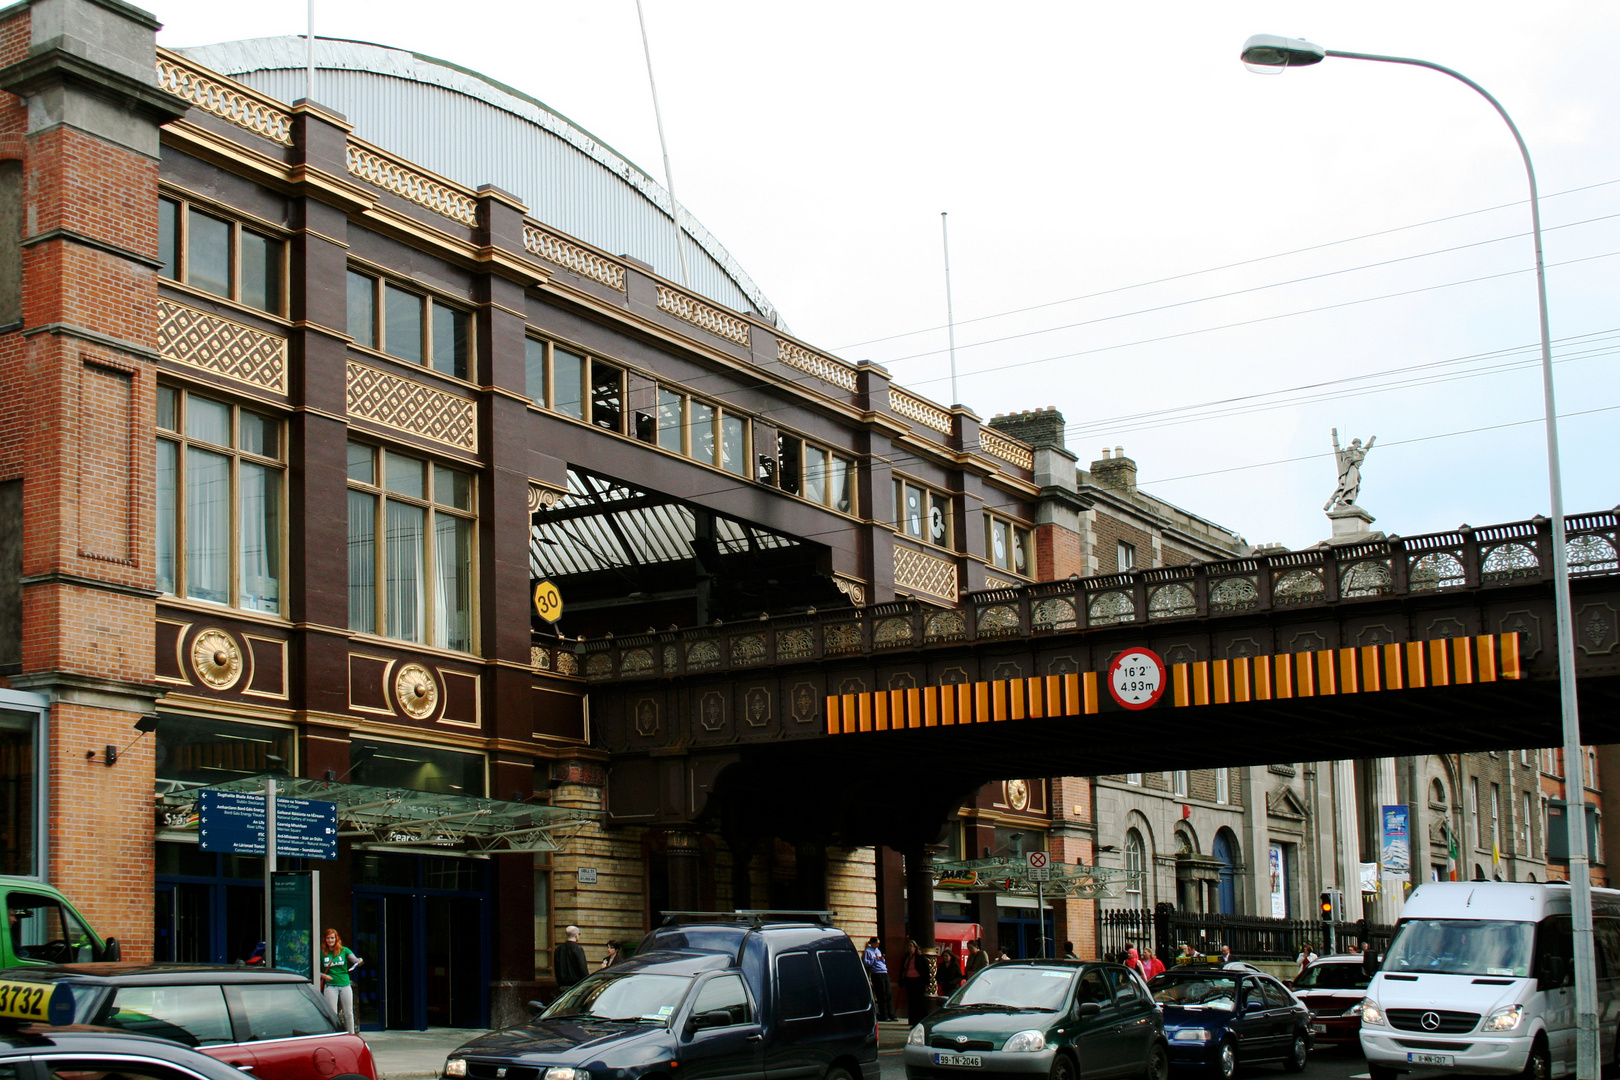 Dublin, Pearse Station - 2012